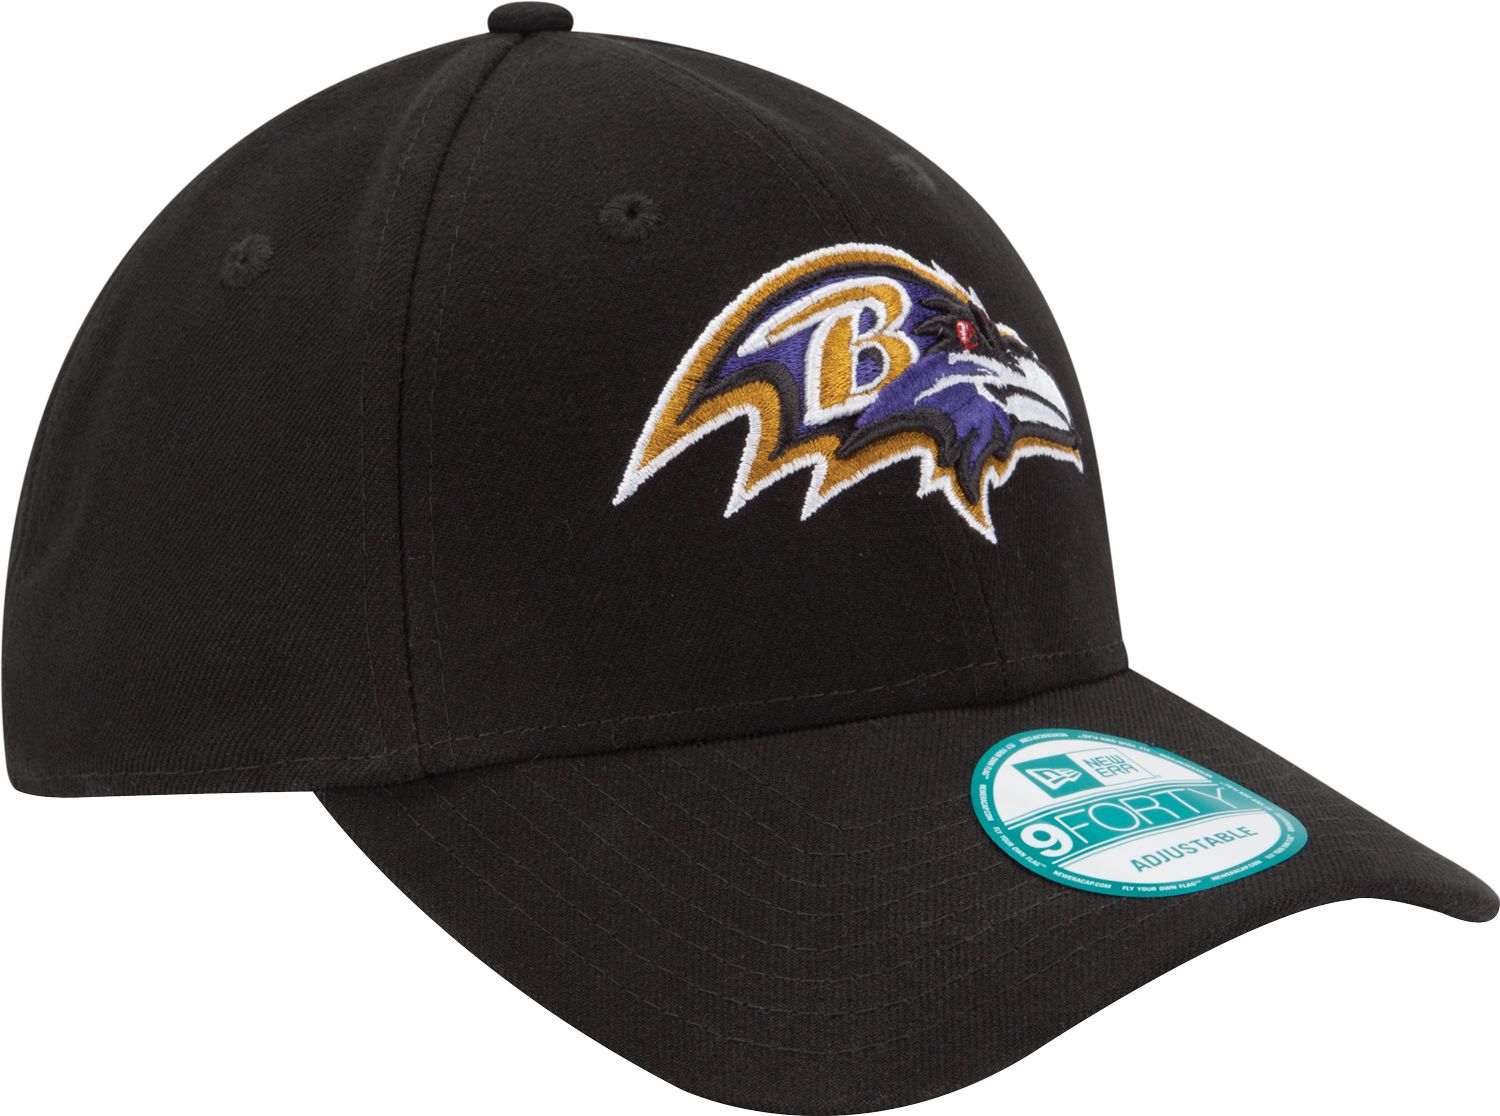 New Era Men's Baltimore Ravens League 9Forty Adjustable Black Hat